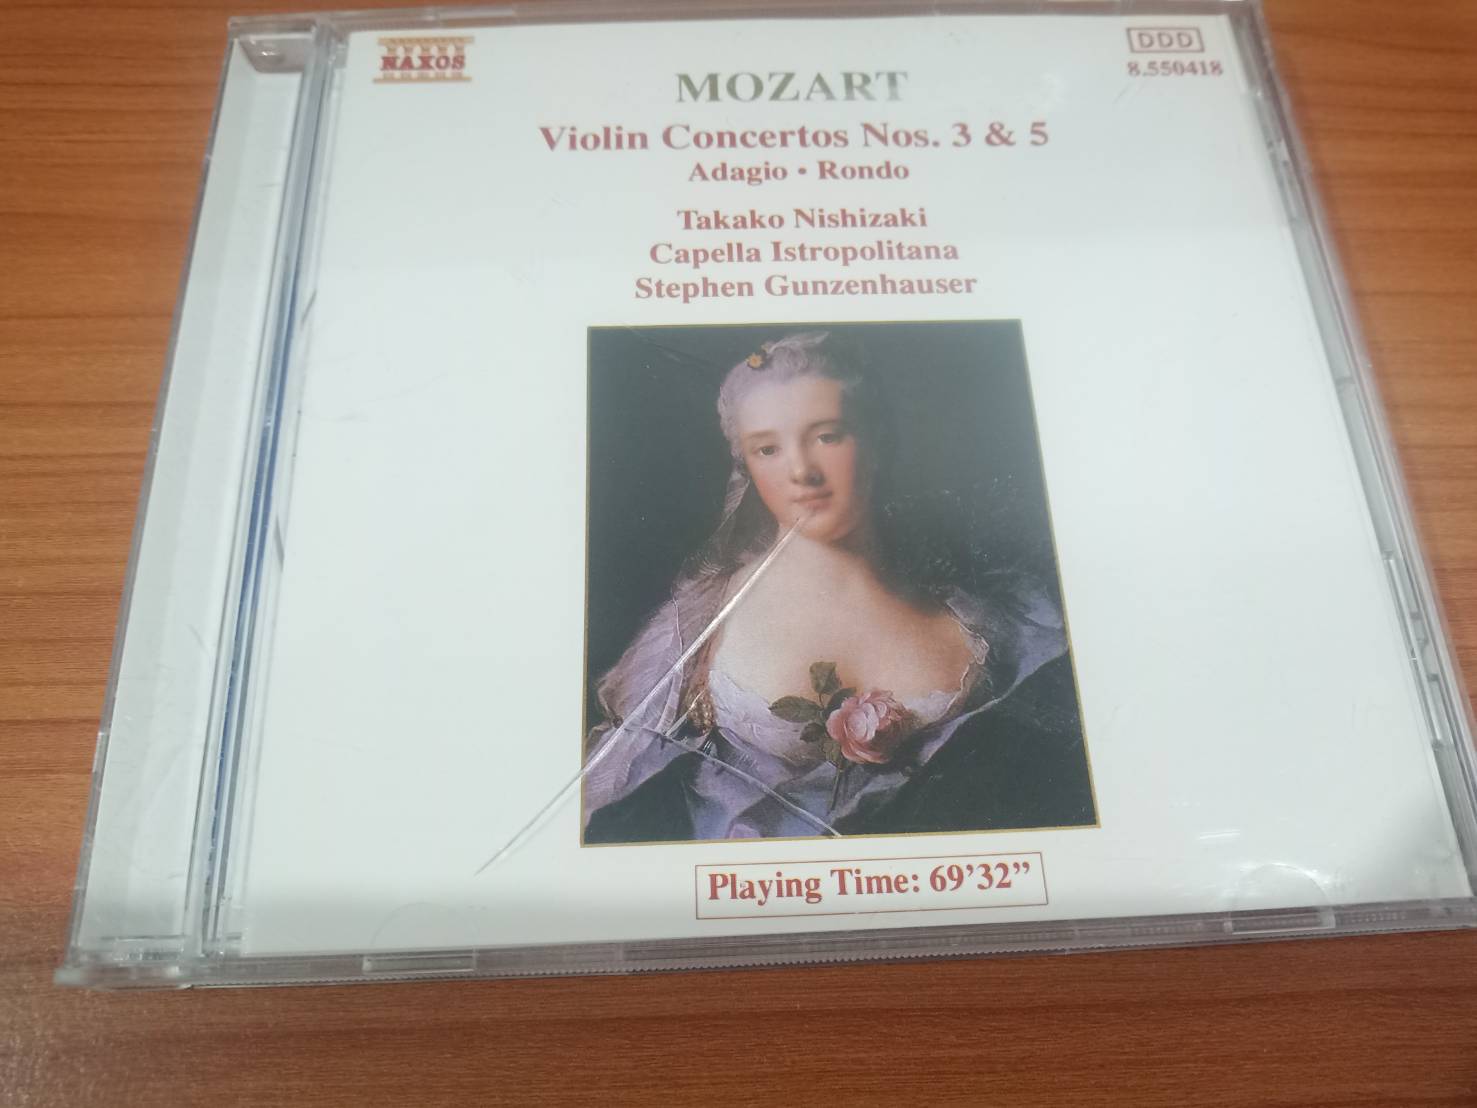 CD MUSIC ซีดีเพลงสากล MOZART Violin Concertos Nos.3 & 5